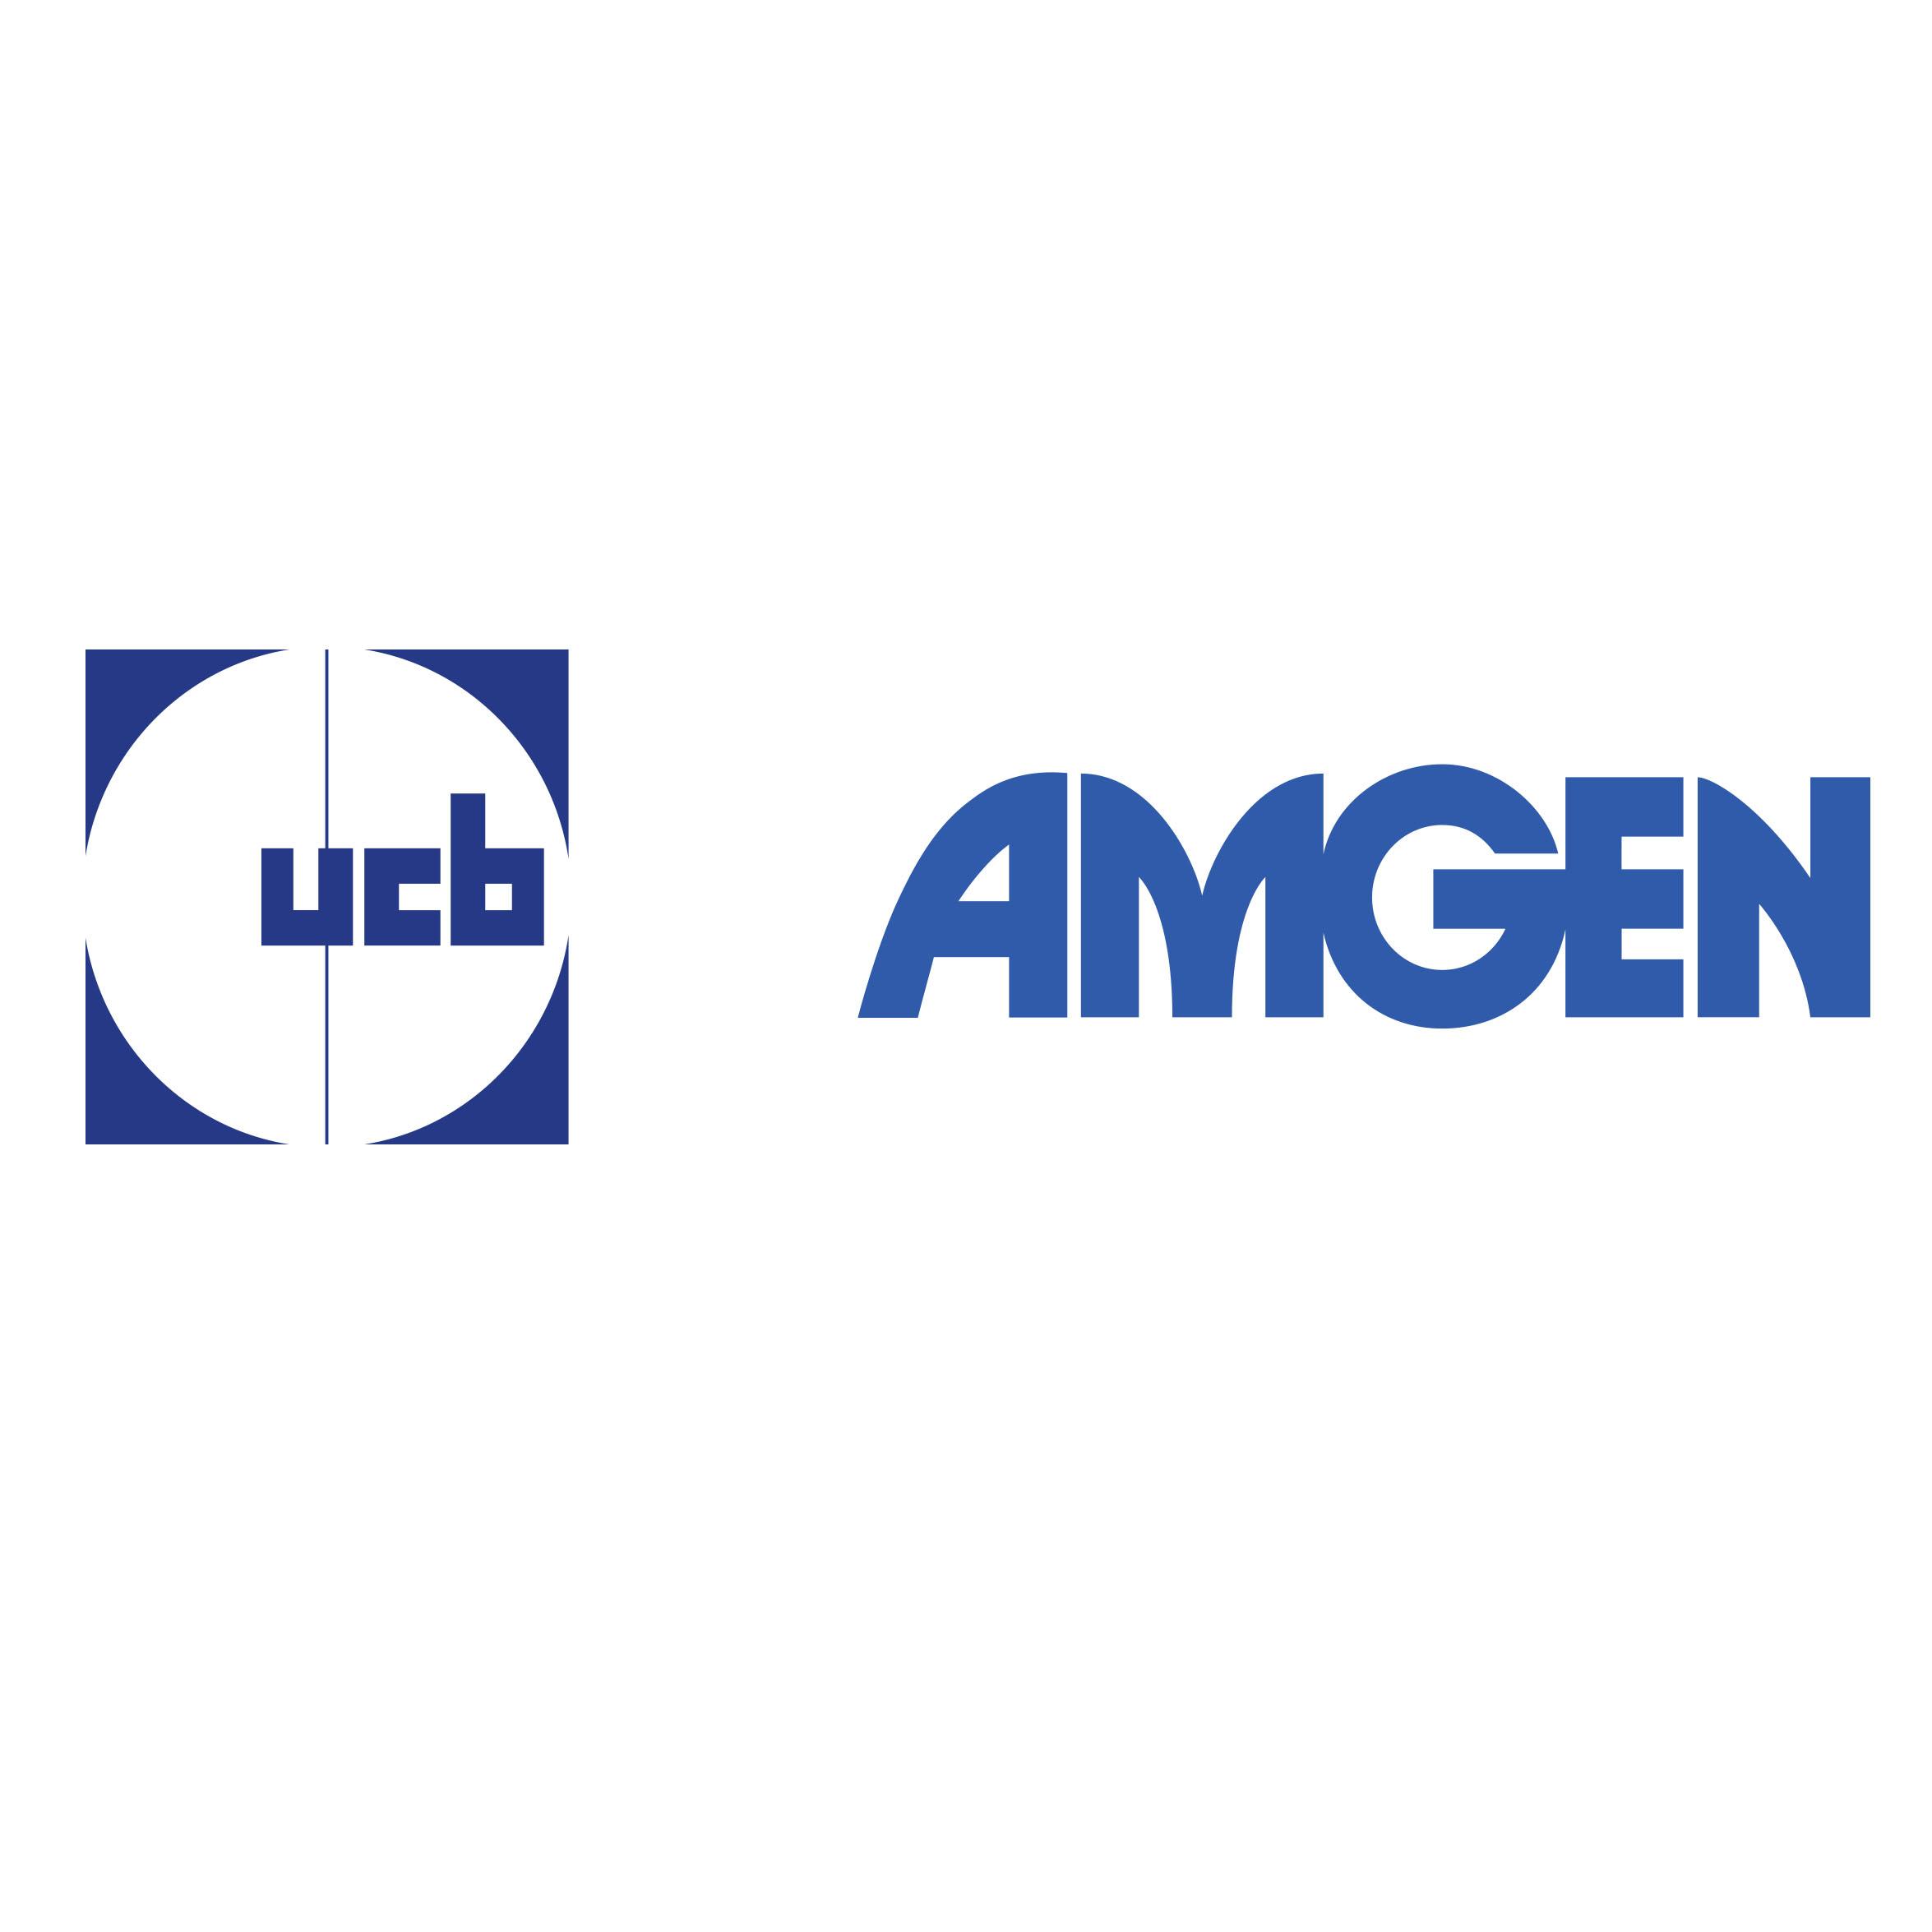 UCB AMGEN